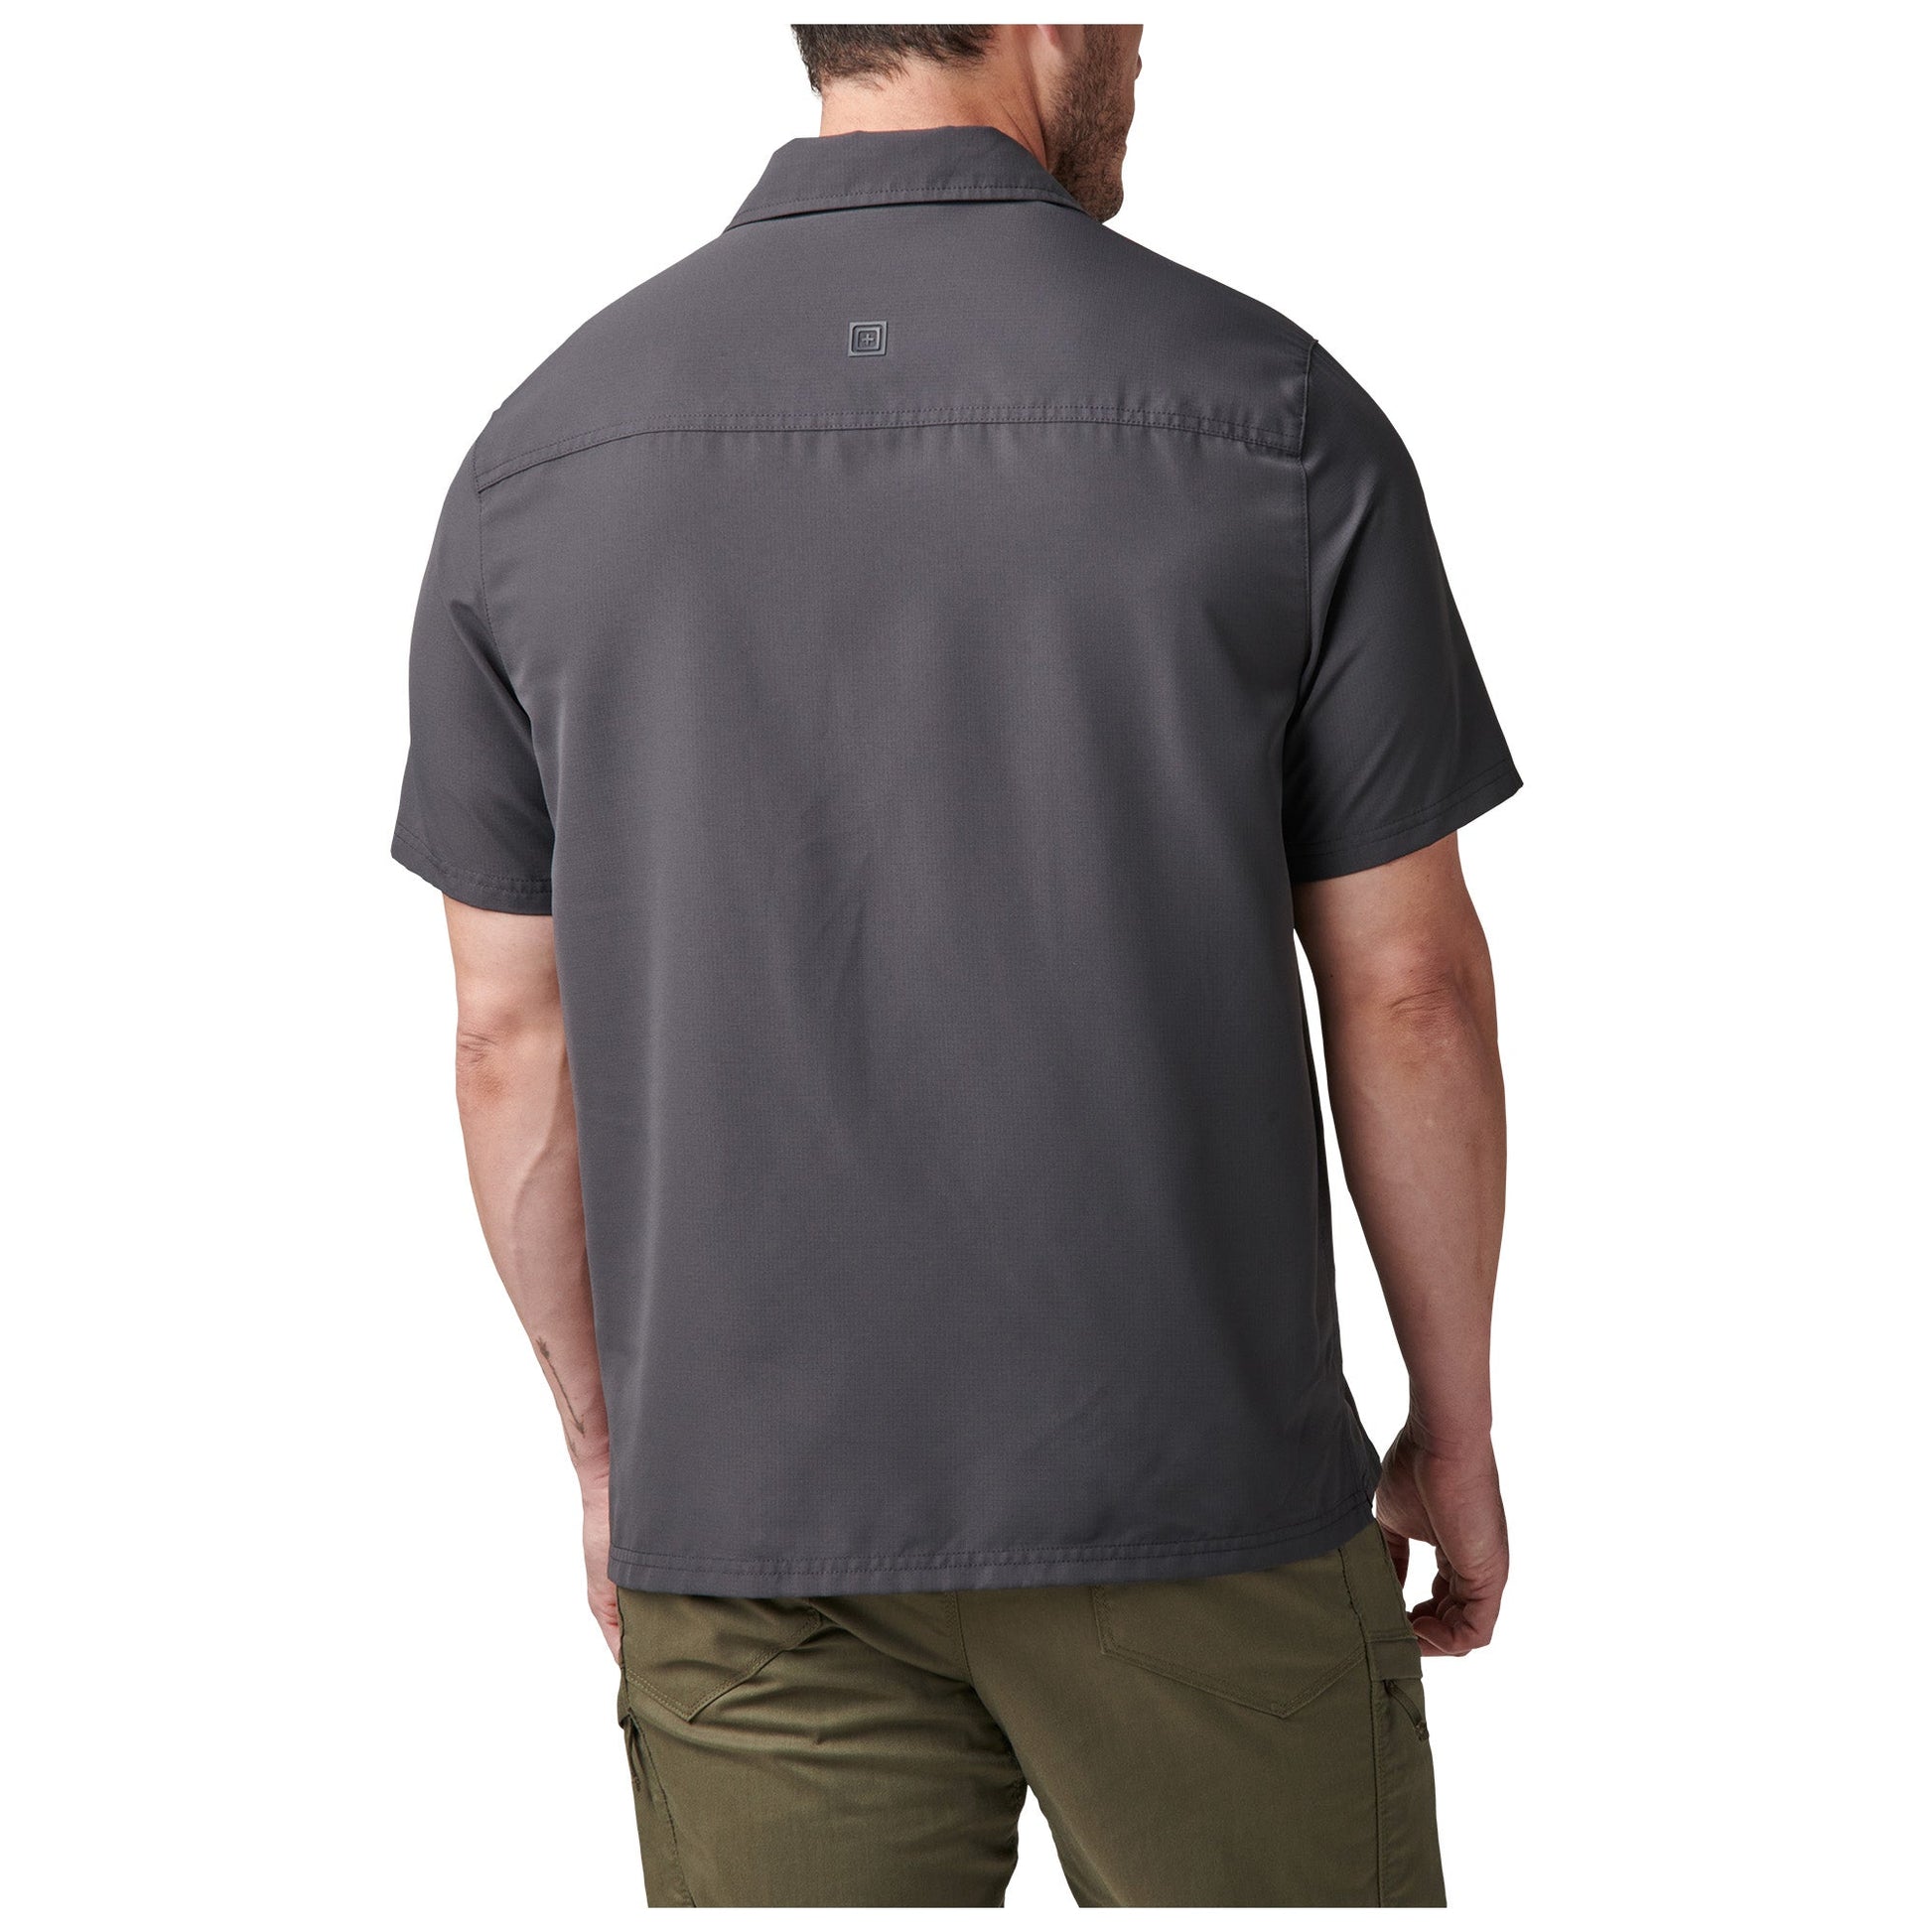 5.11 Tactical Marksman Utility Short Sleeve Shirt Tactical Distributors Ltd New Zealand